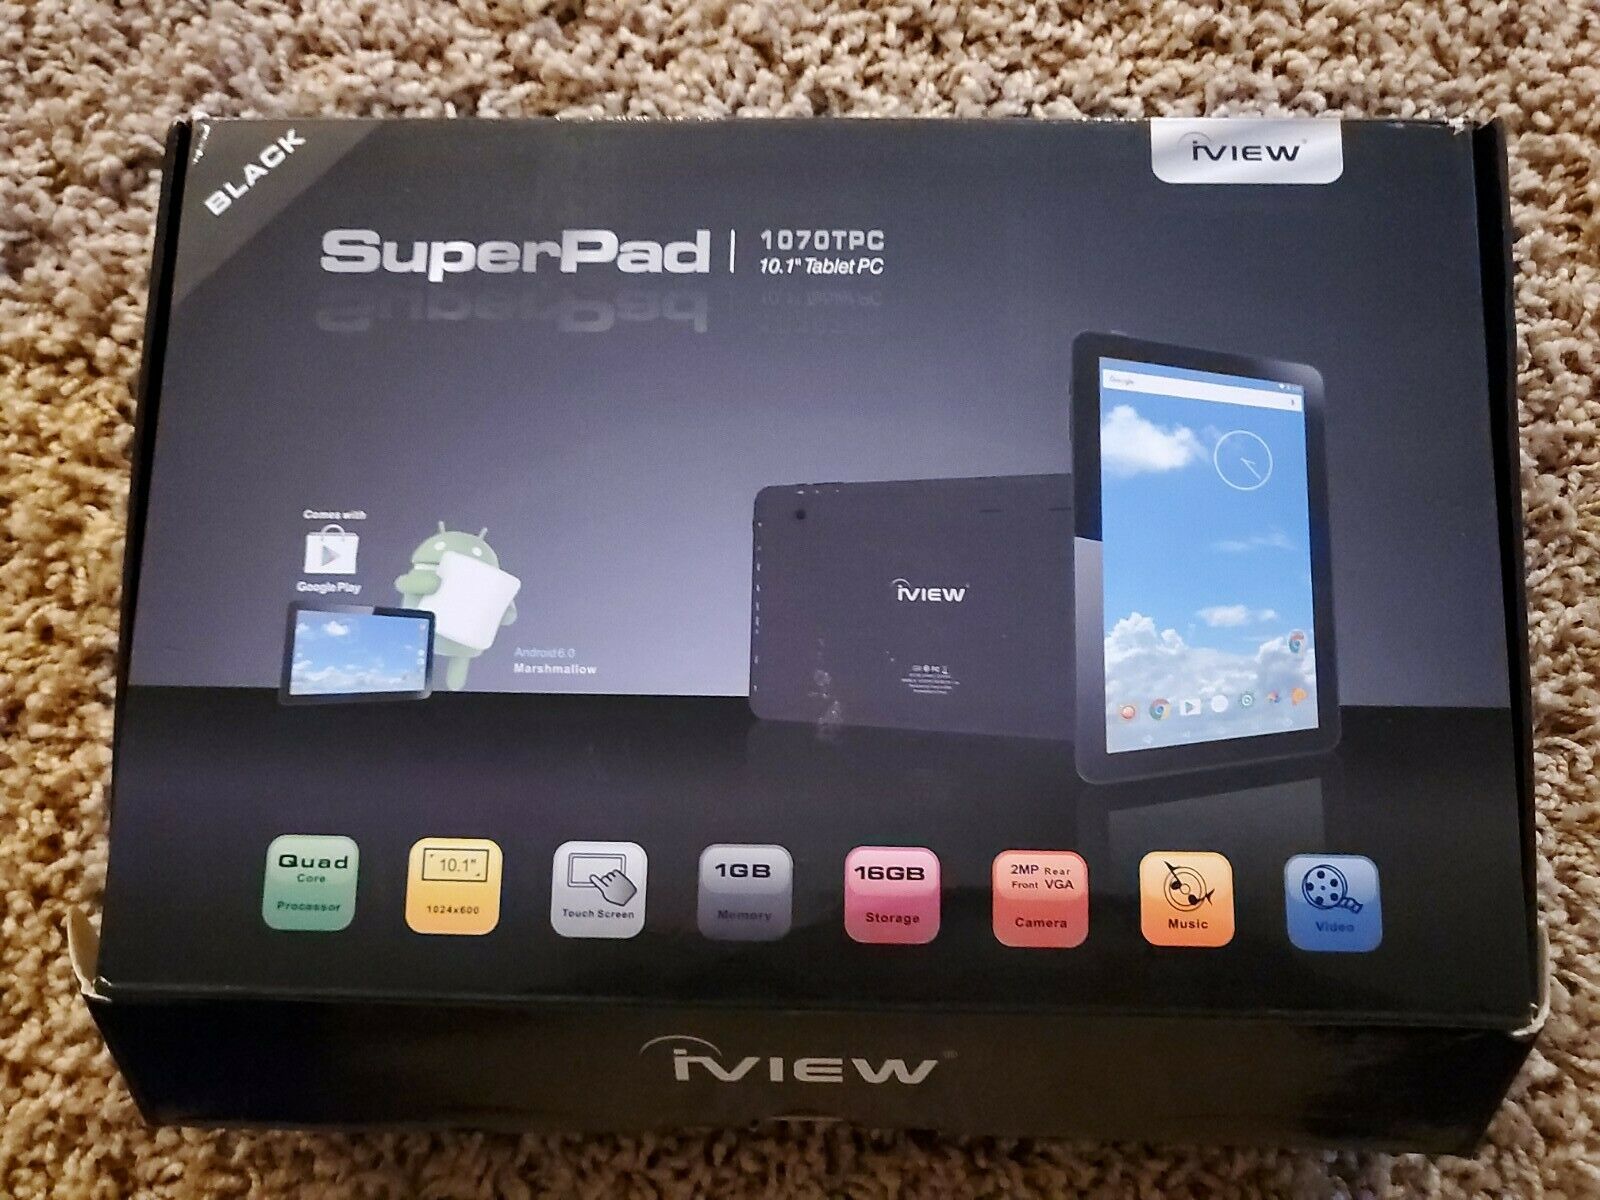 iVIEW 10.1" SuperPad Android Tablet - 1GB Ram - 16+32 GB Storage (1070TPC-BK) US